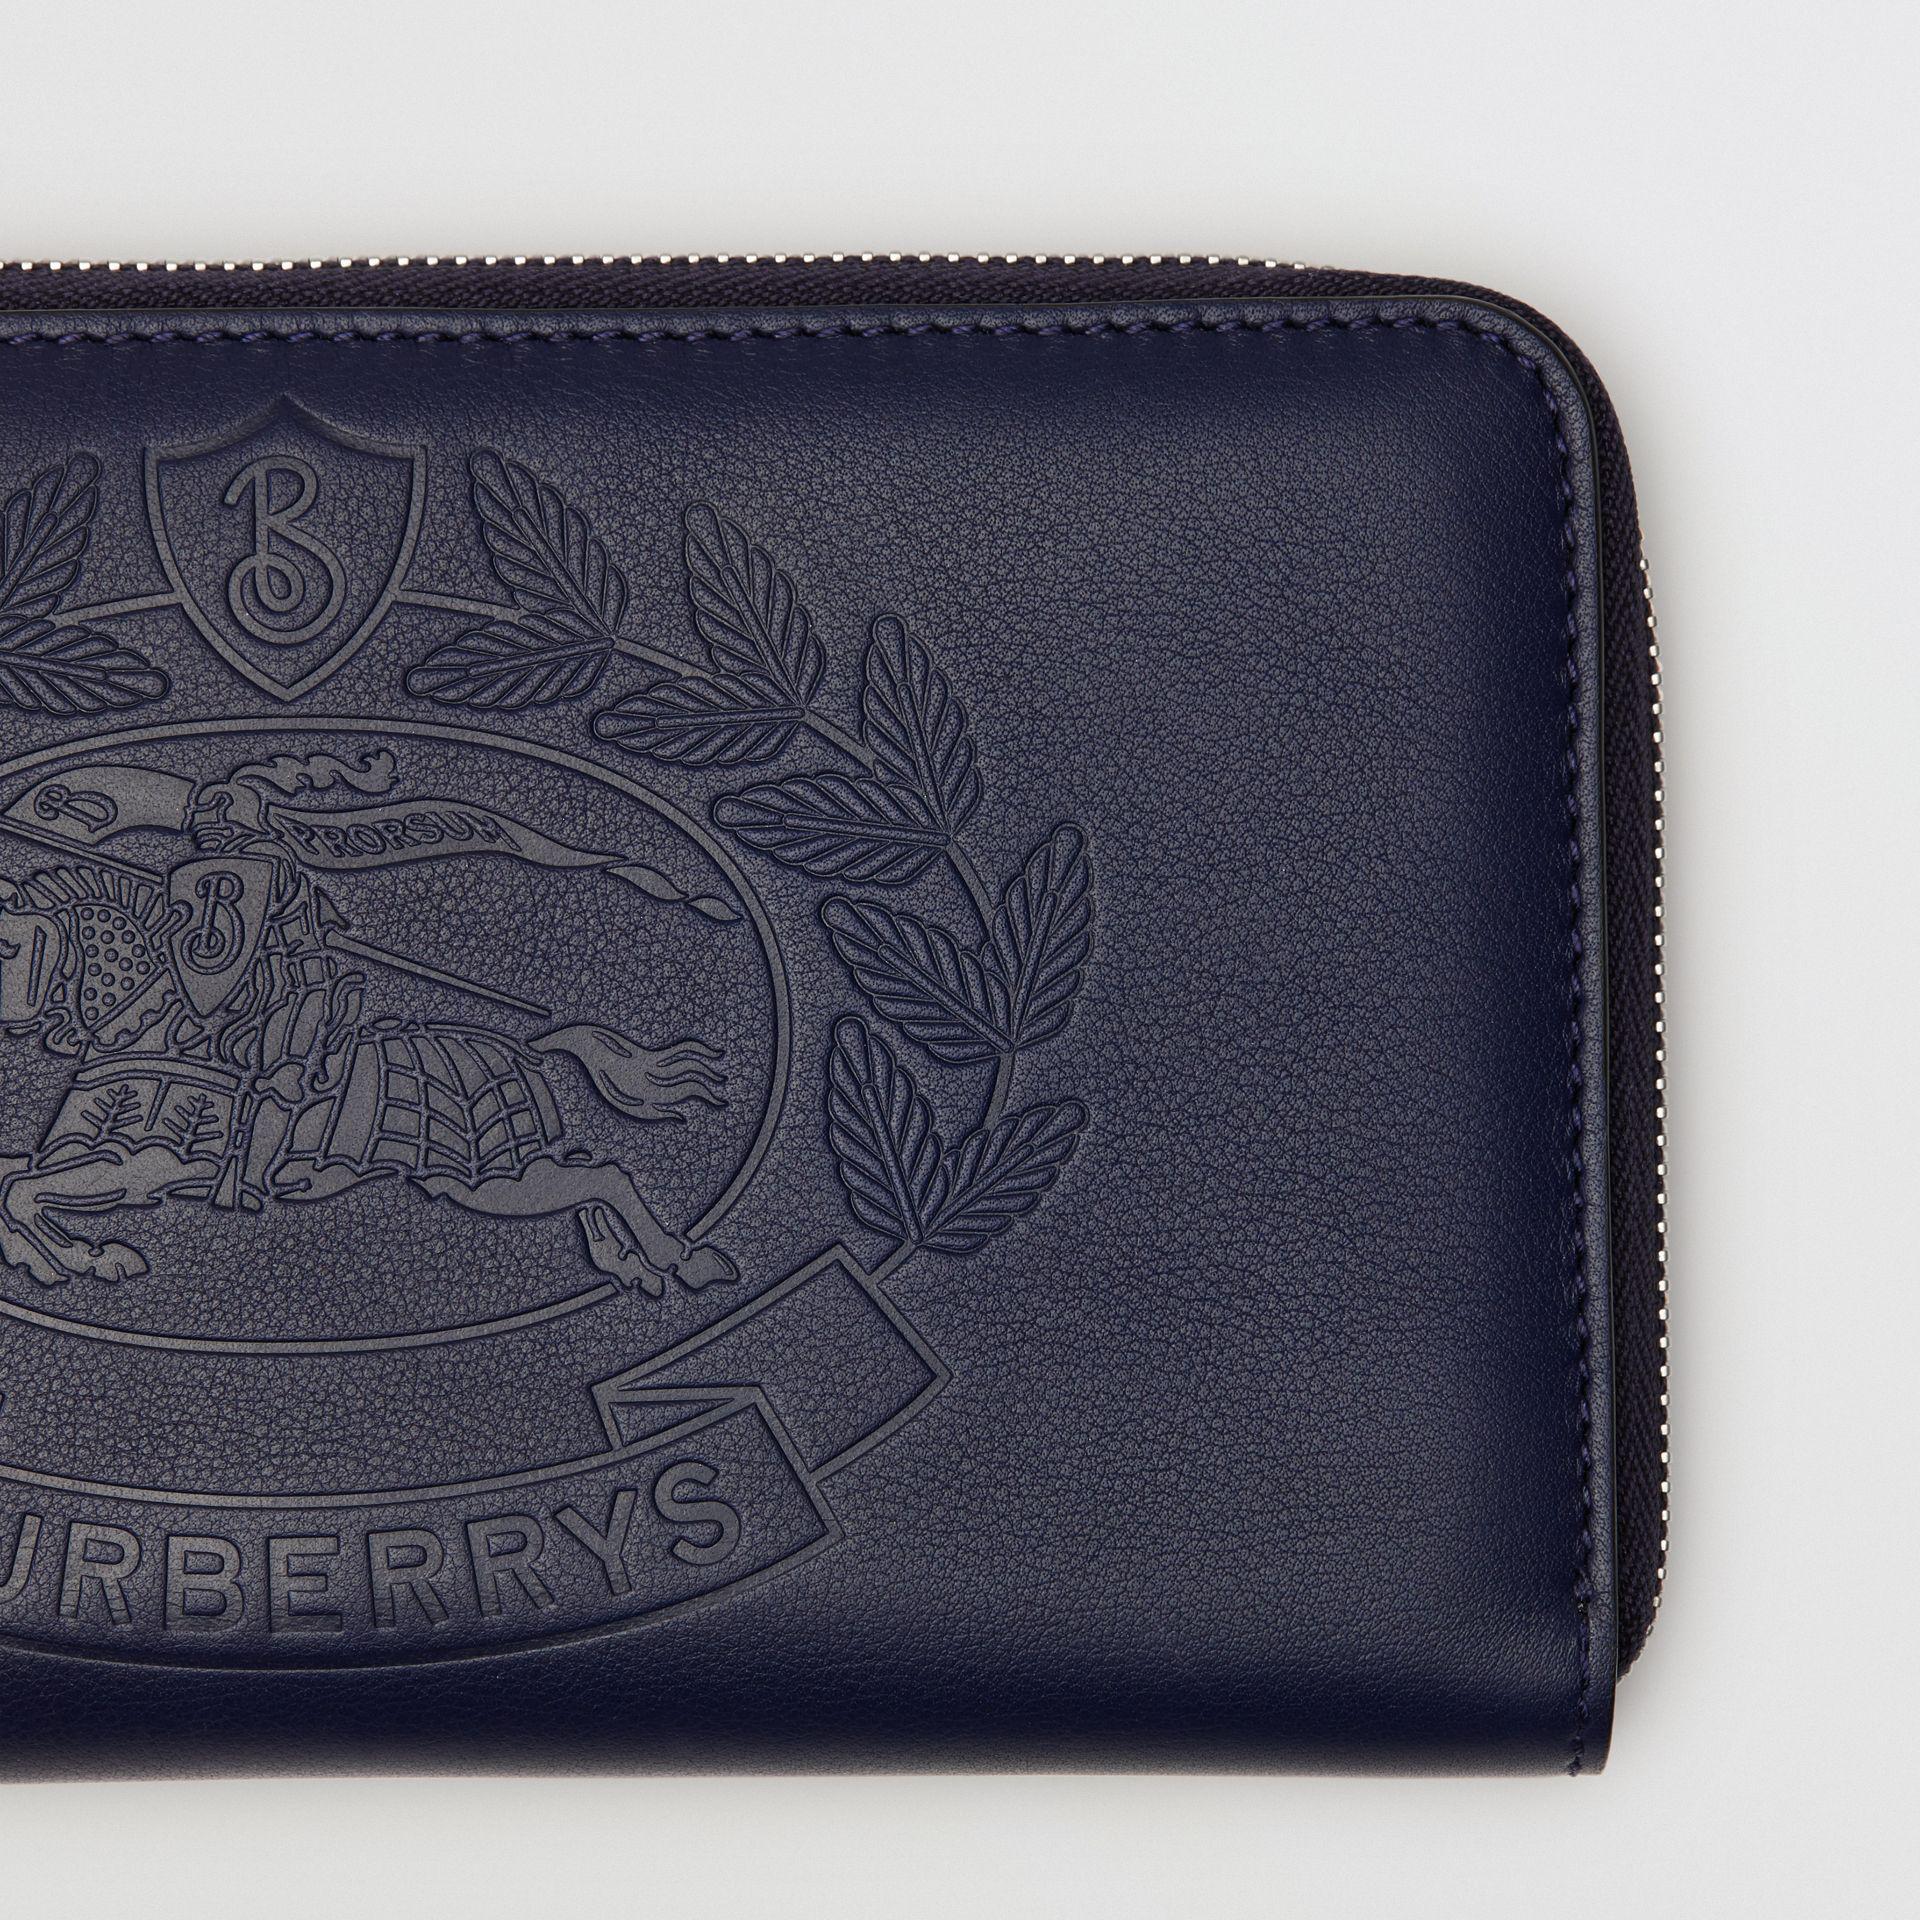 burberry crest wallet